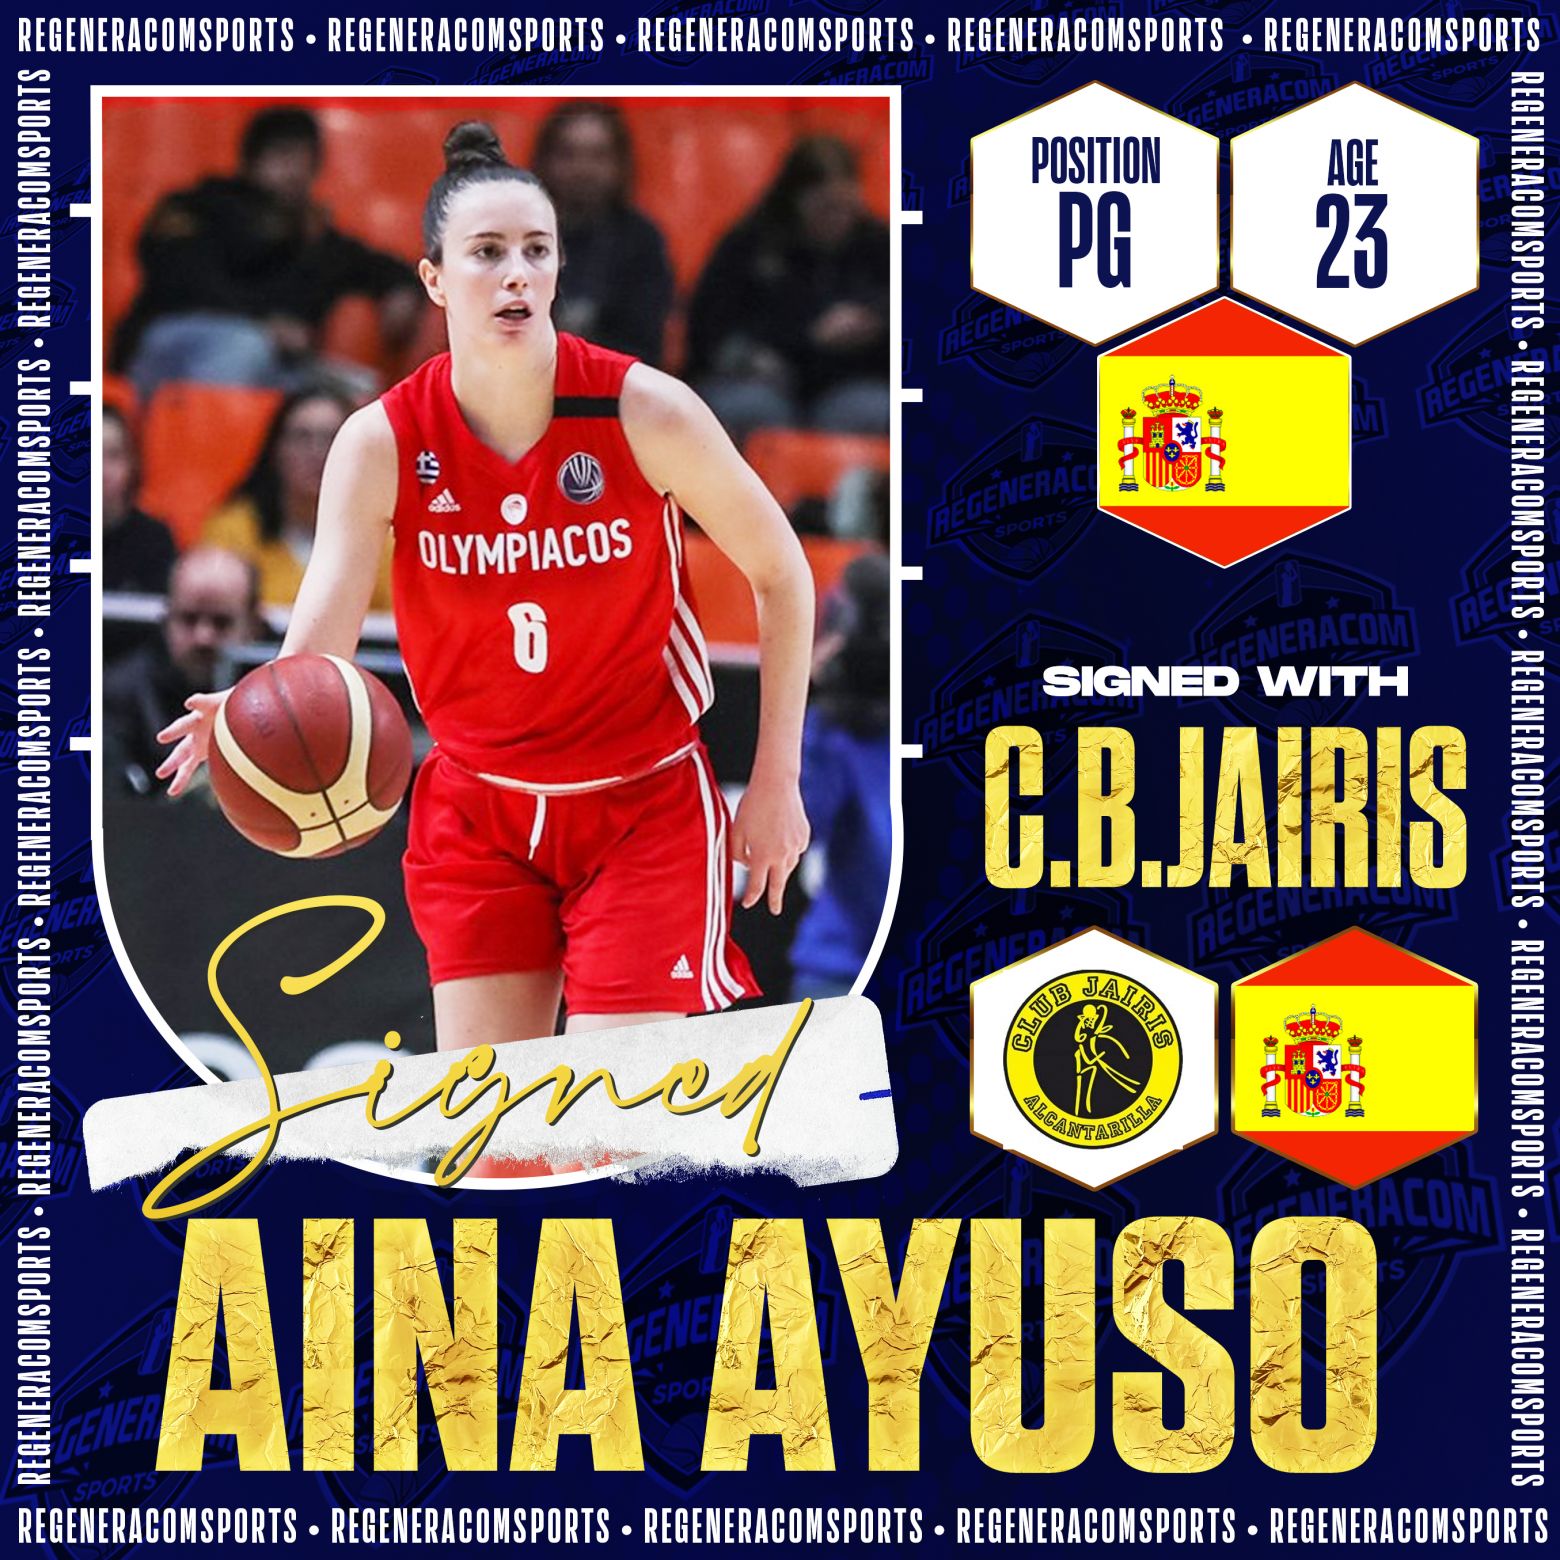 AINA AYUSO has signed with C.B.Jairis for the 2023/24 season